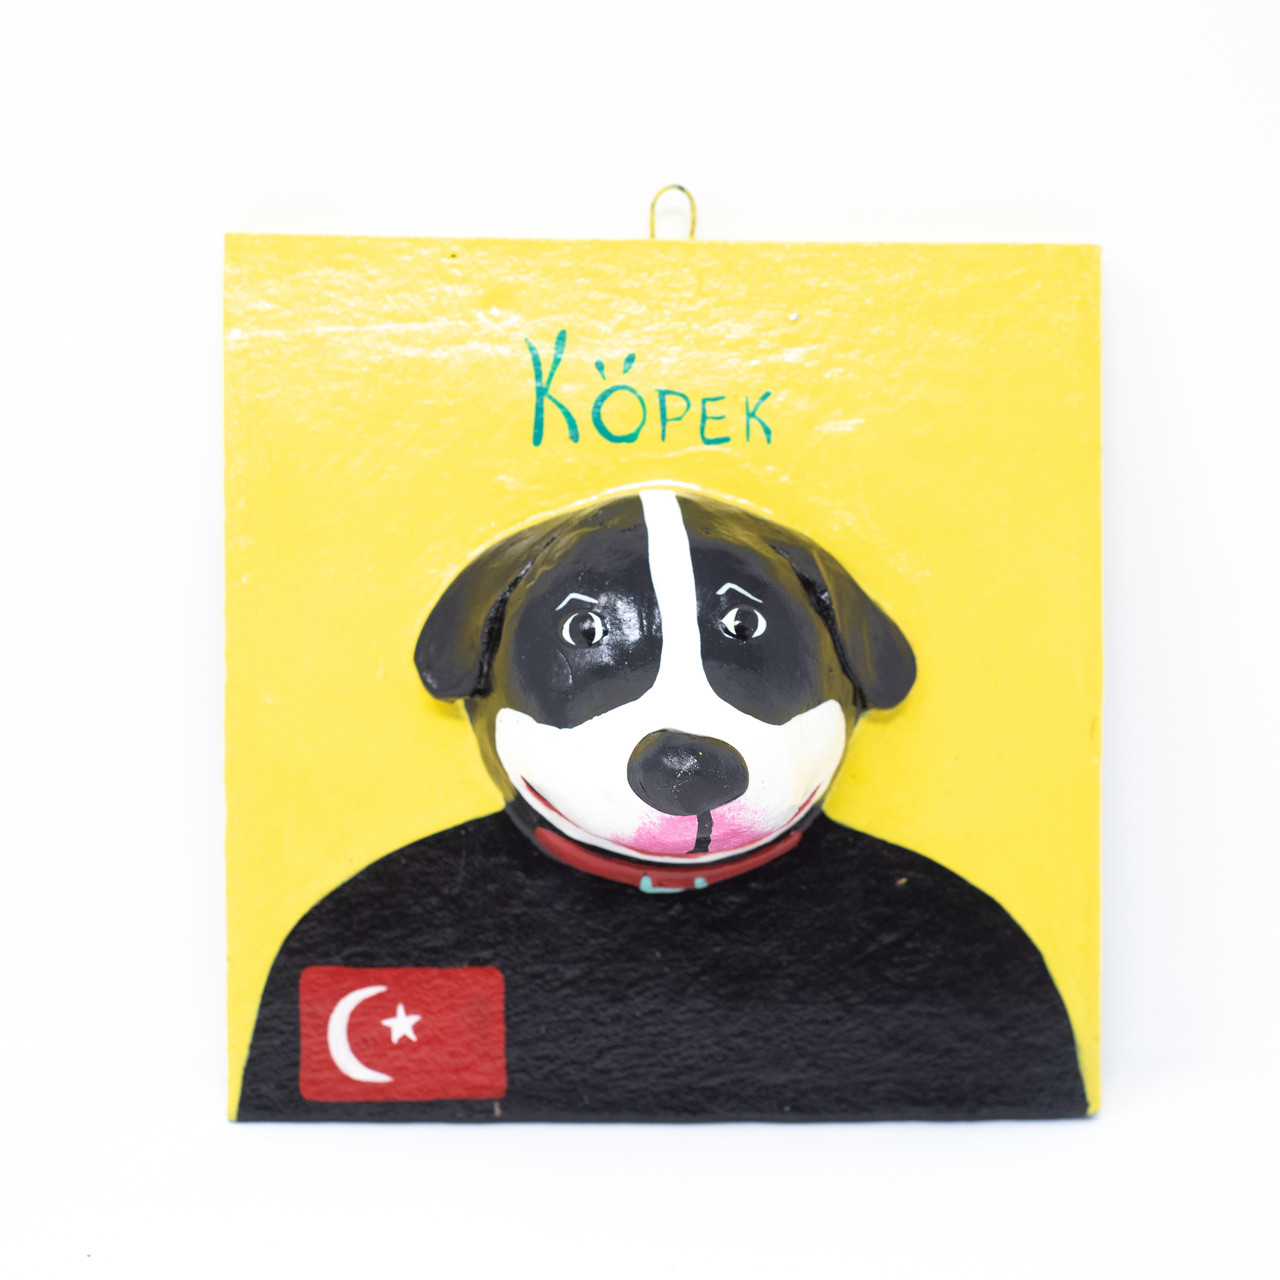 Republic of Turkey, Turkish, One-of-a-Kind, Limited Edition, Sustainable, Dog, Perro, Loyal Companion, Kopek,